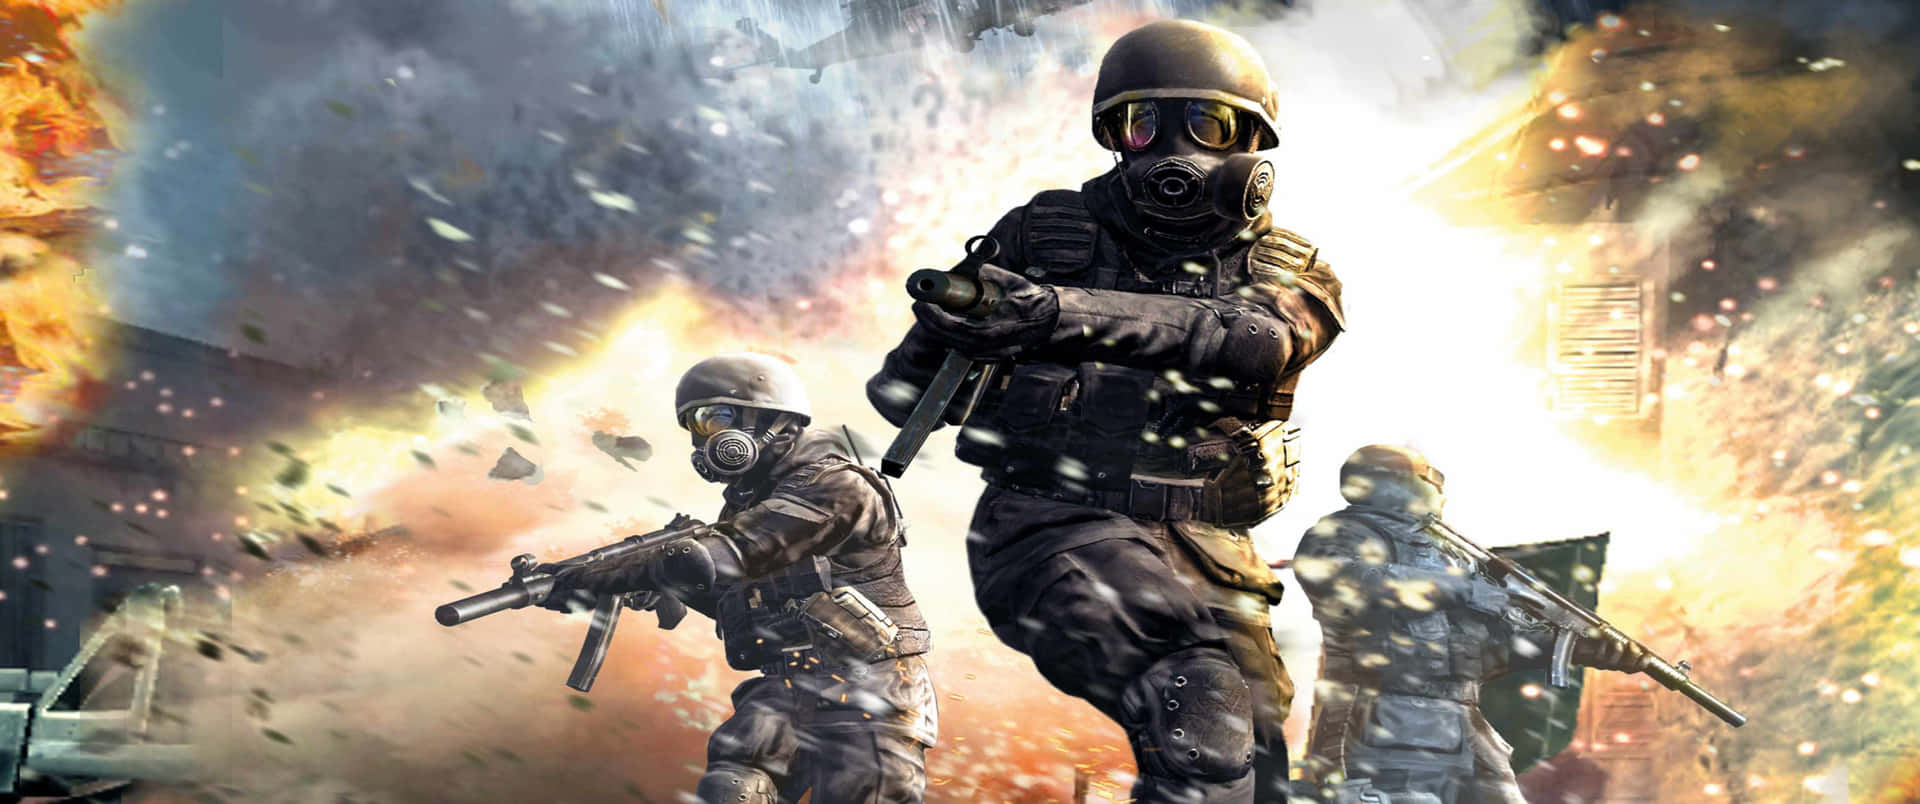 Stortexplosion 3440x1440p Call Of Duty Modern Warfare Bakgrund.